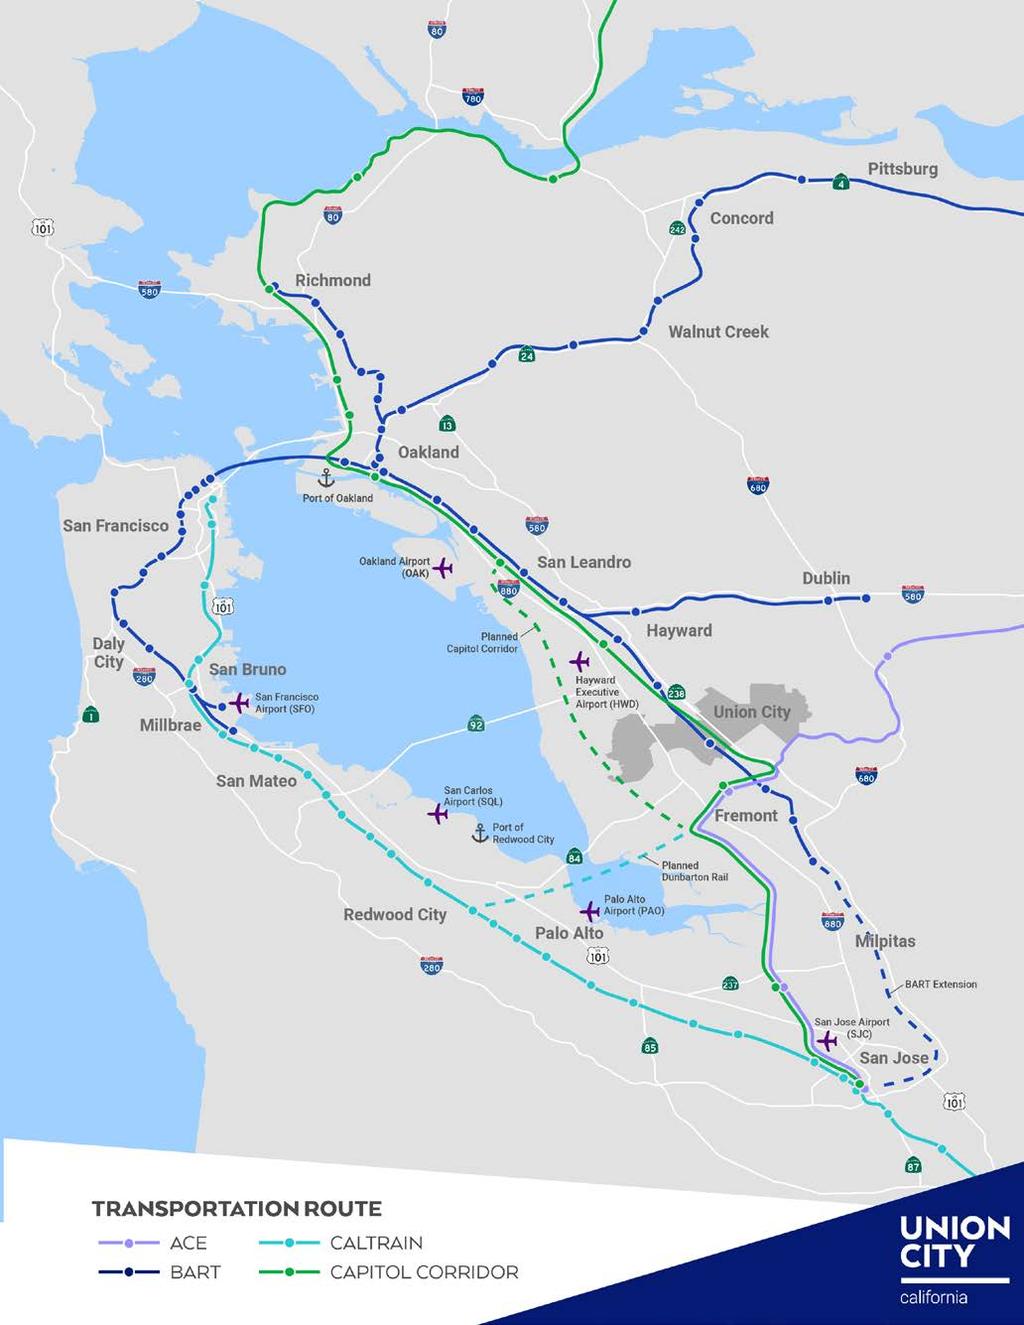 Mobility Figure M-1: Regional Transportation Networks Union City